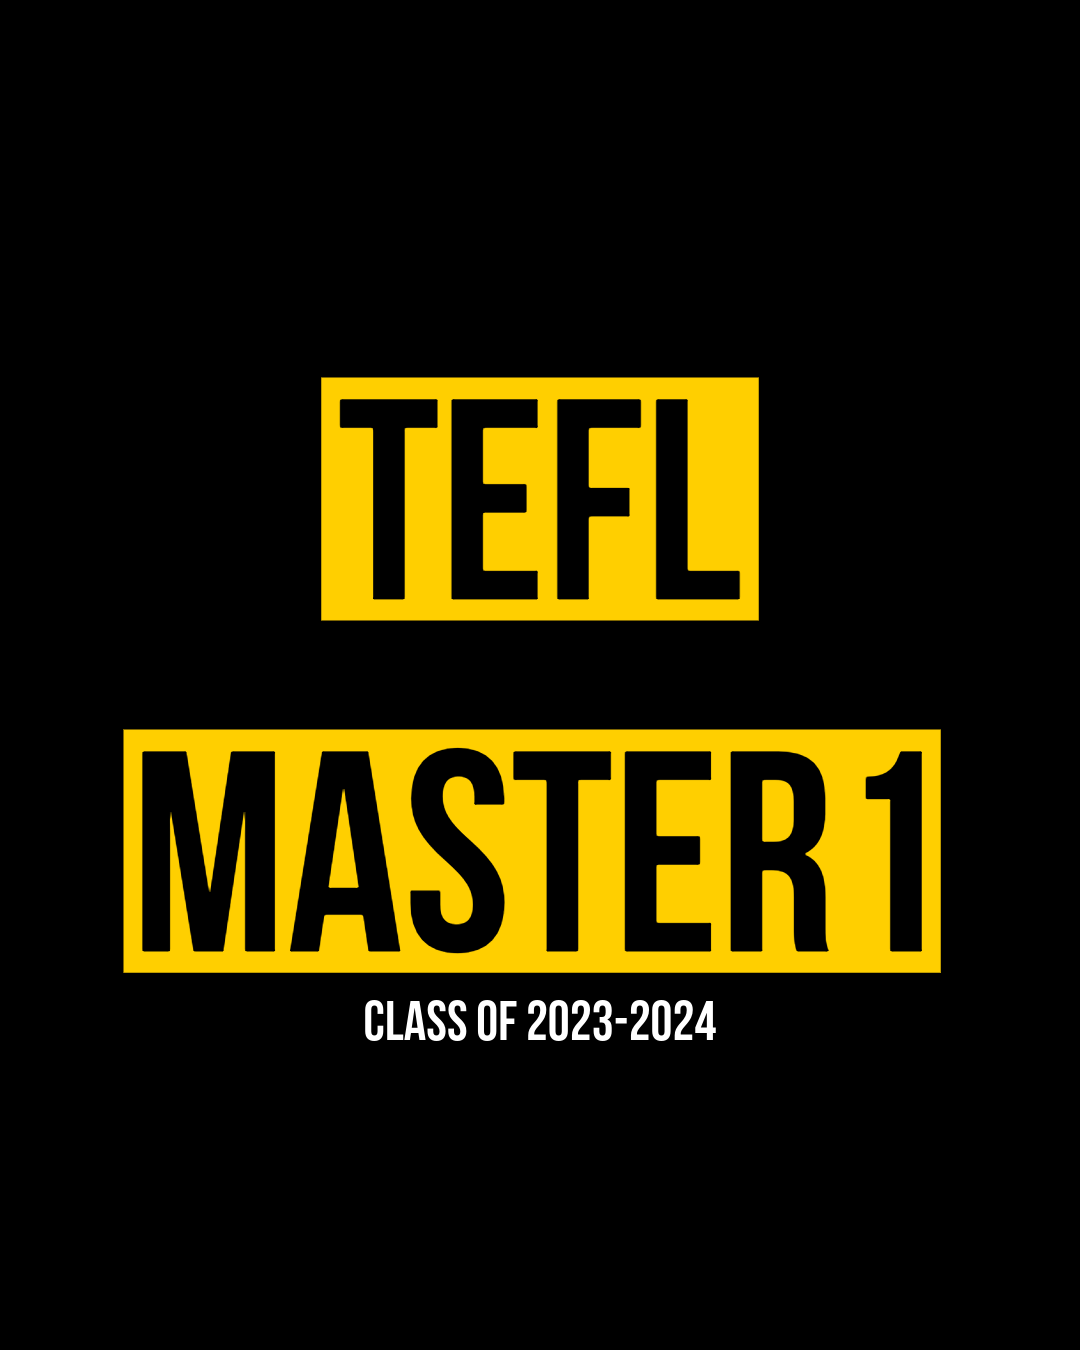 TEFL Master 1